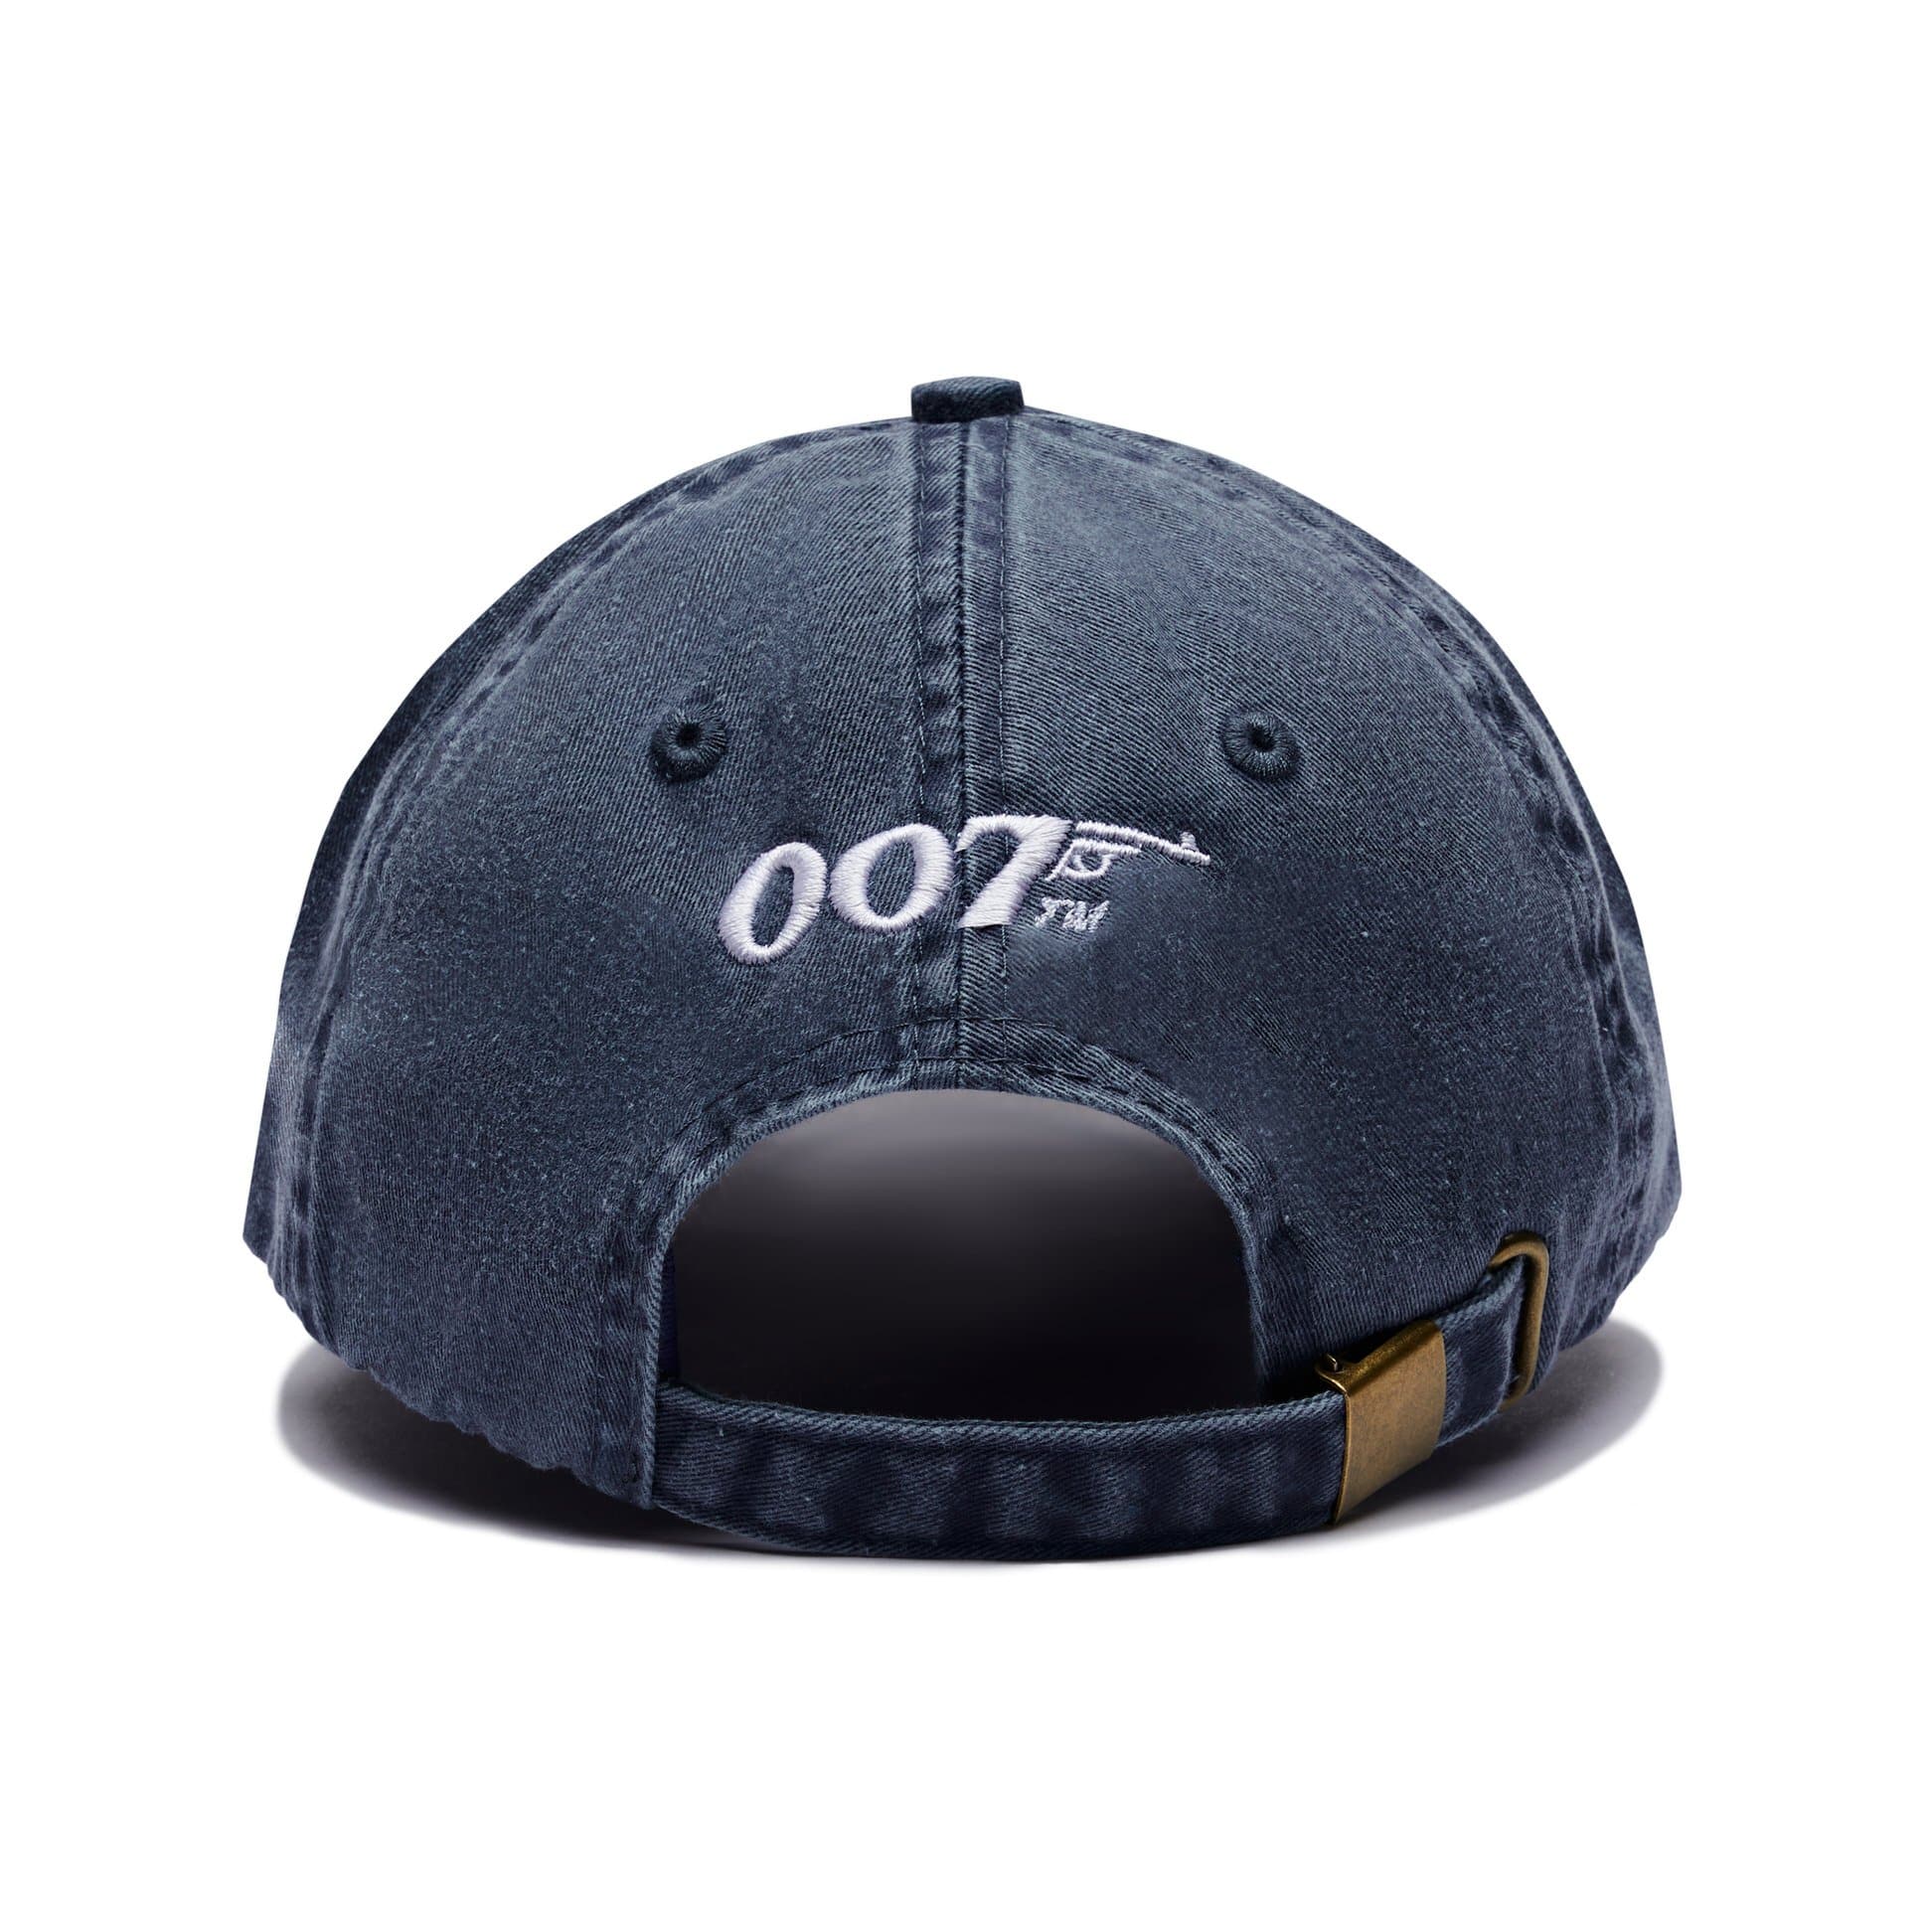 Retro 007 Logo Embroidered Baseball Cap - Denim Blue